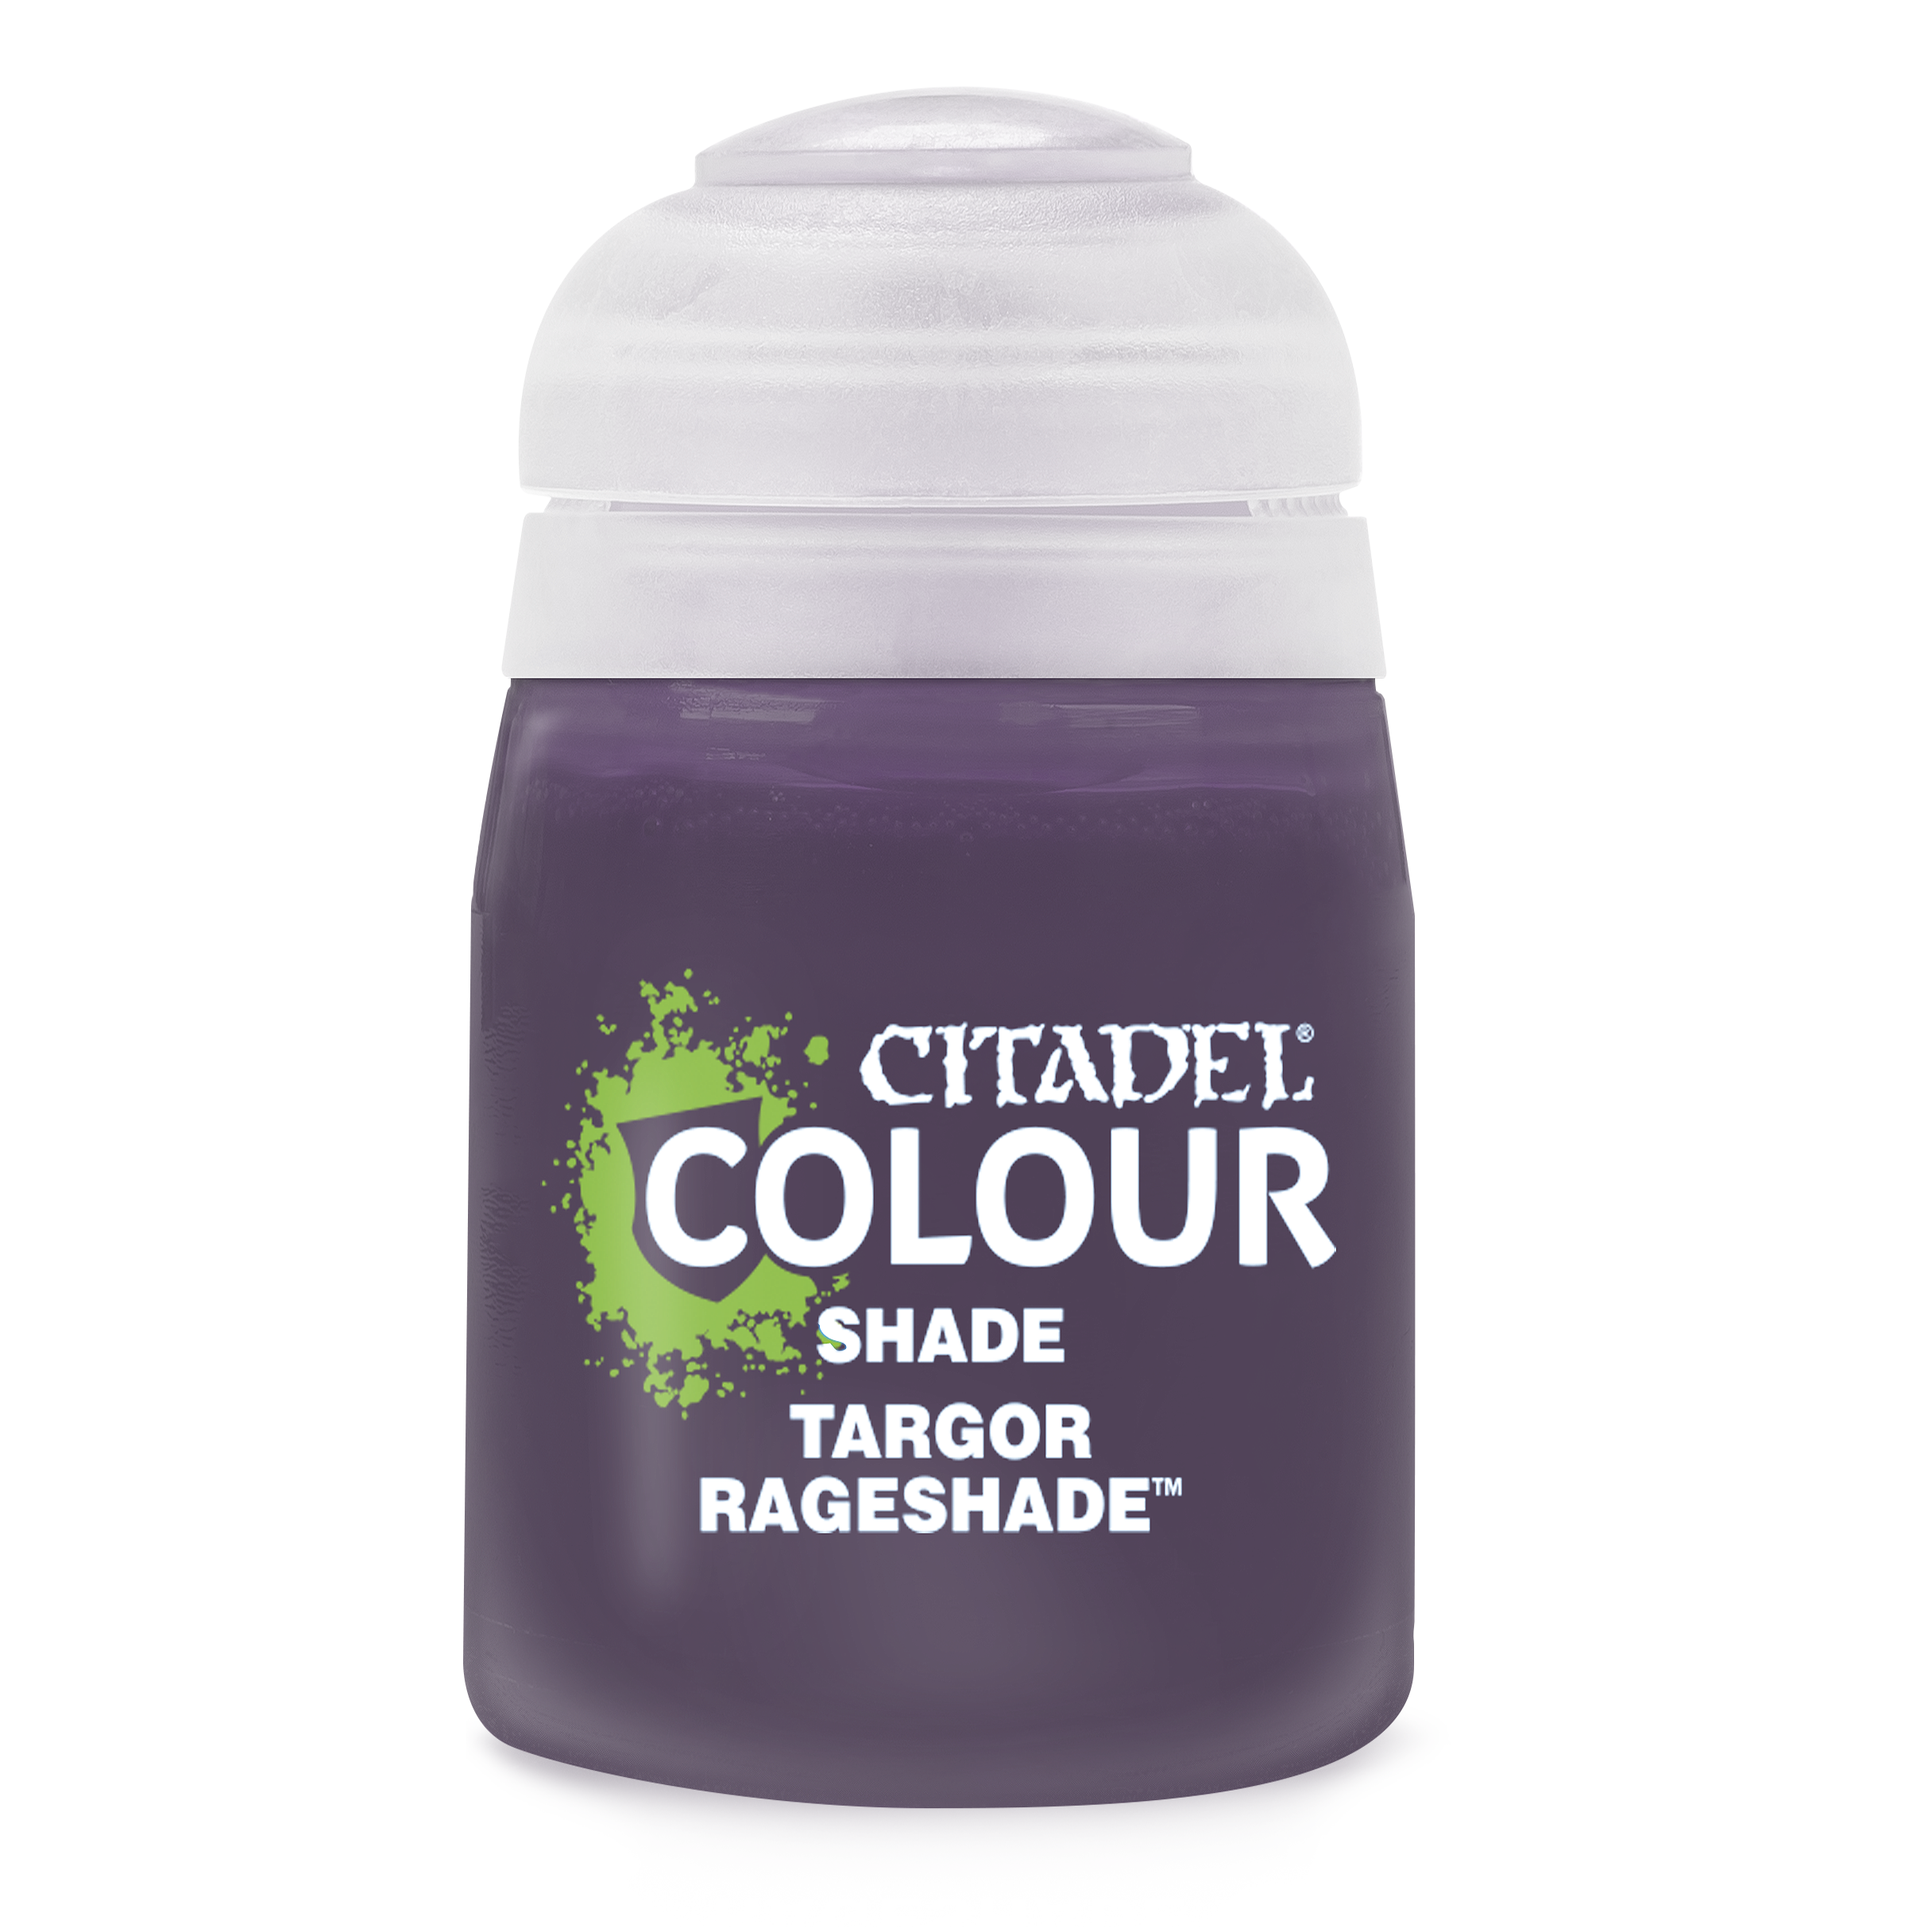 Targor Rageshade - Citadel Shade Colour